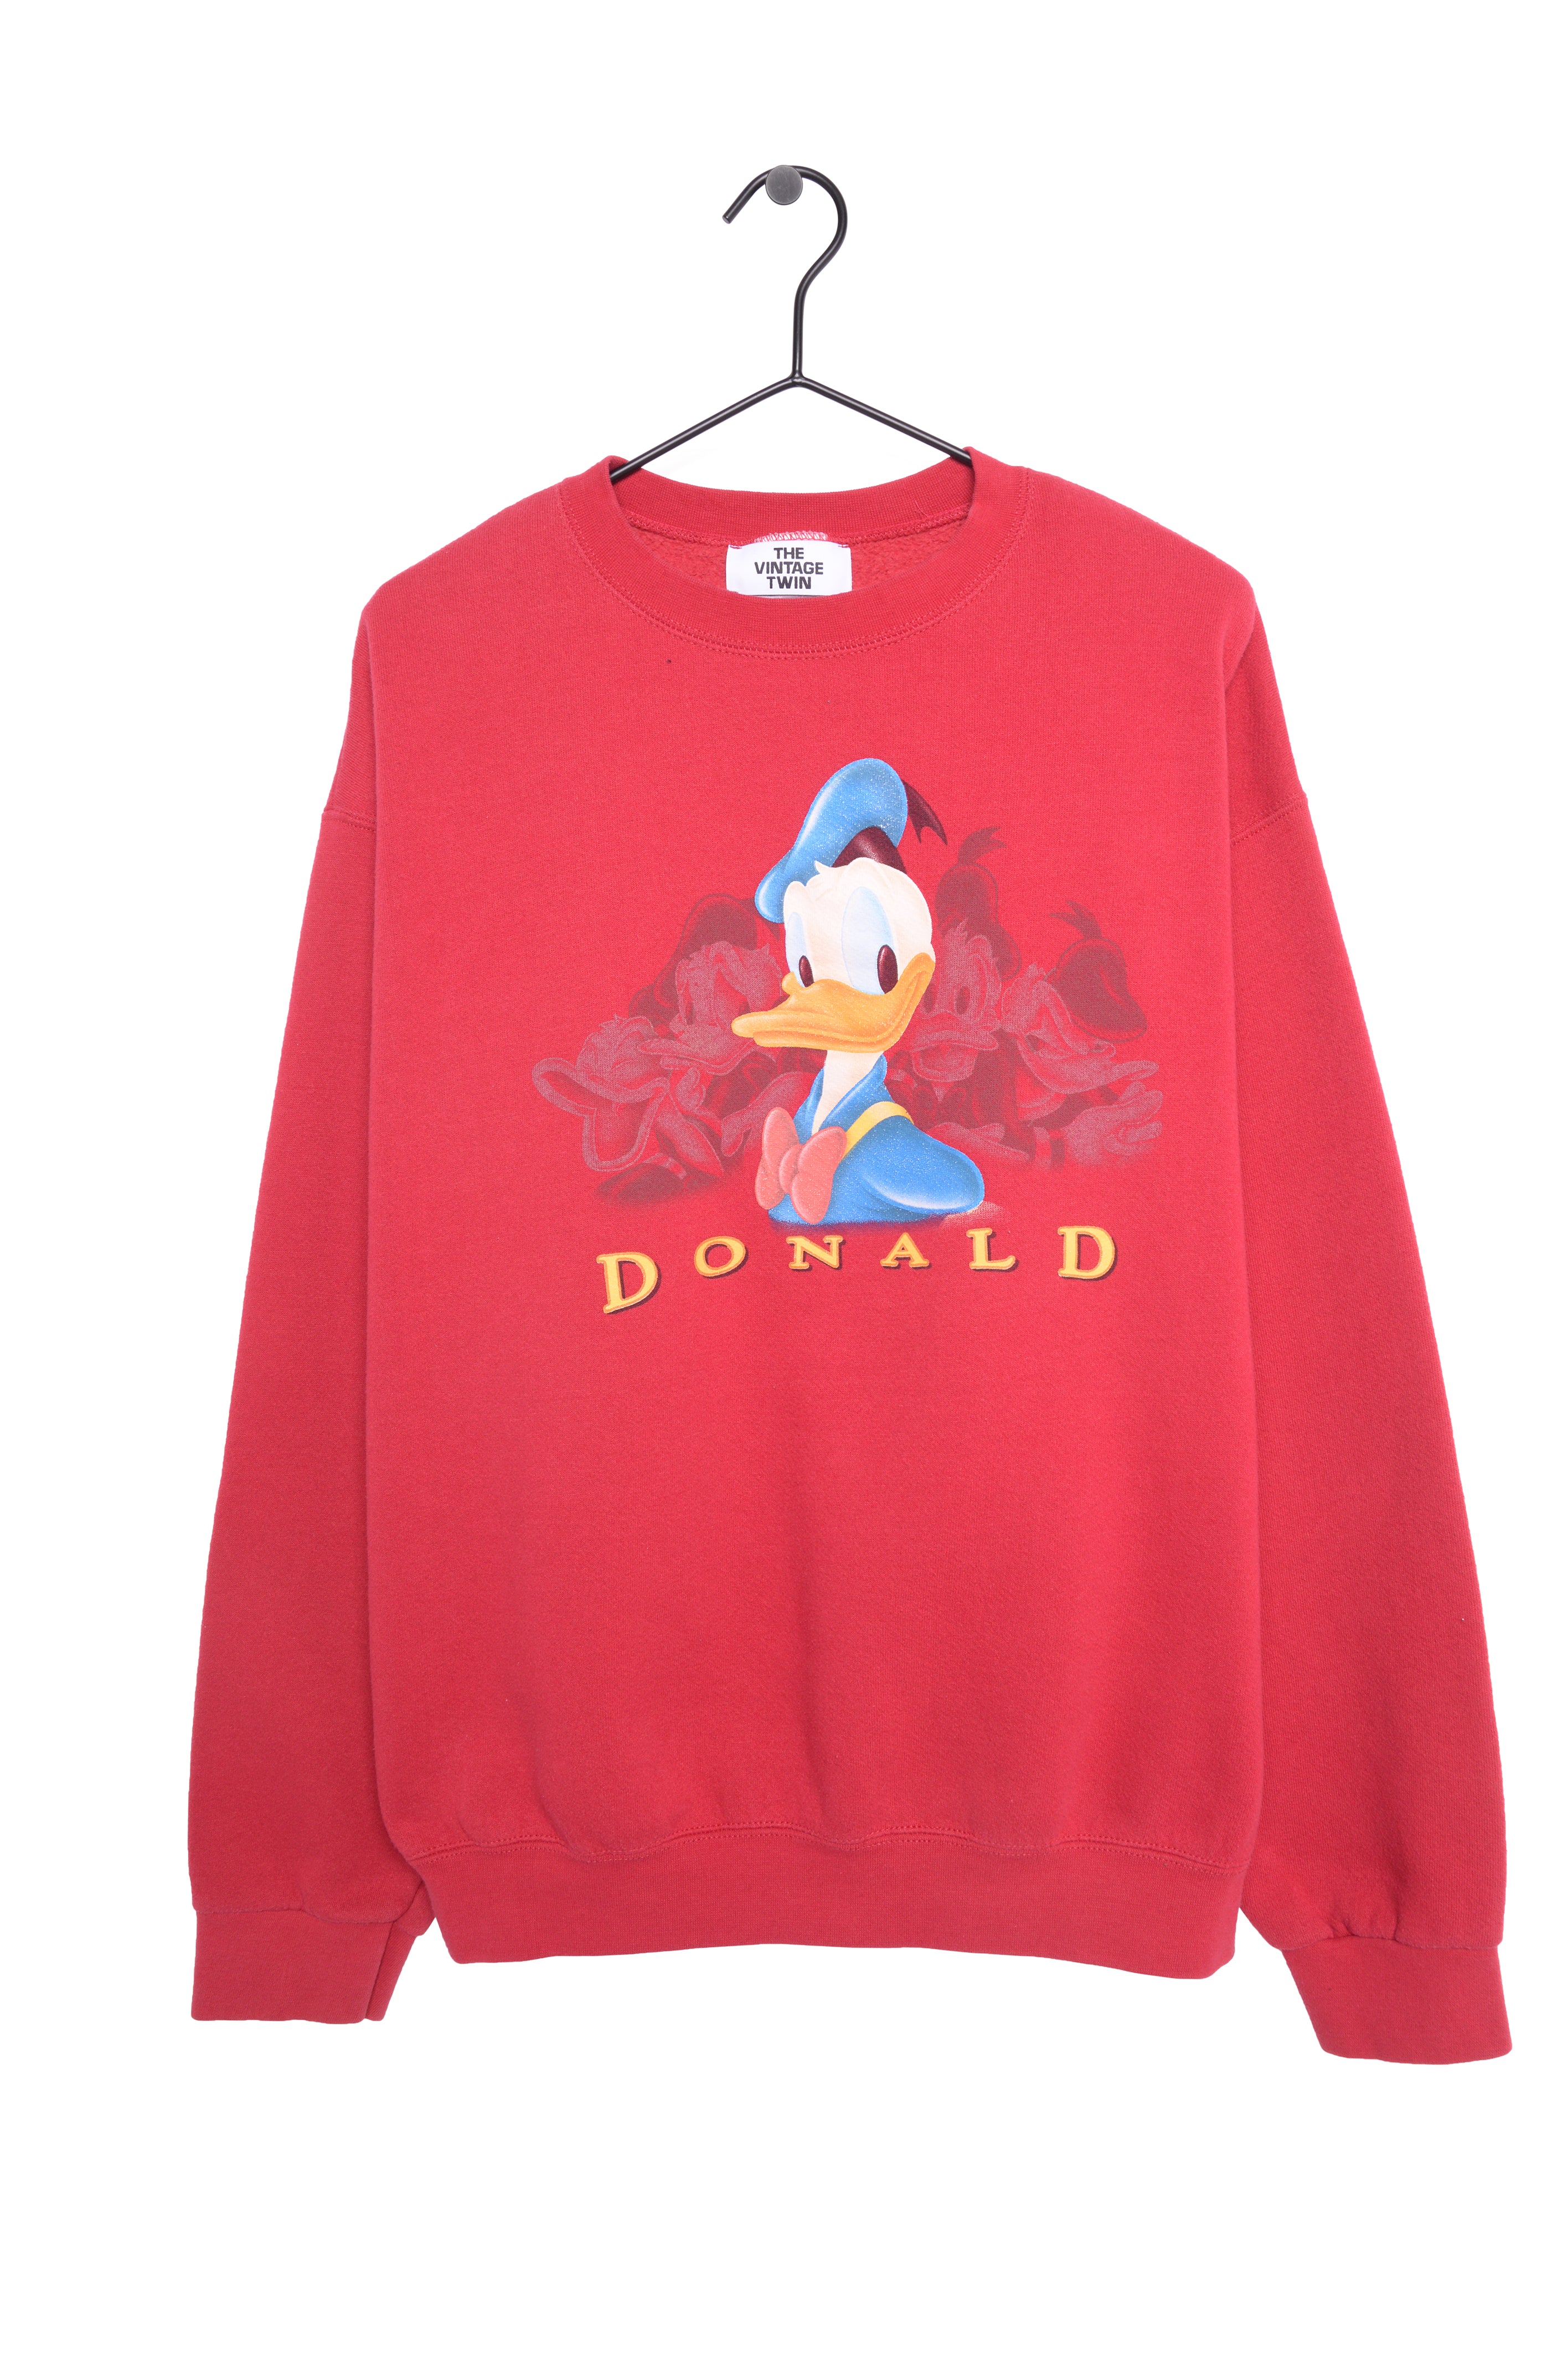 Duck Graphic Sweatshirt Vintage Sweatshirt Red Sweatshirt Duck Sweatshirt  XL Red Graphic Jumper Duck Sweater Vintage Graphic Sweatshirt XL -   Canada